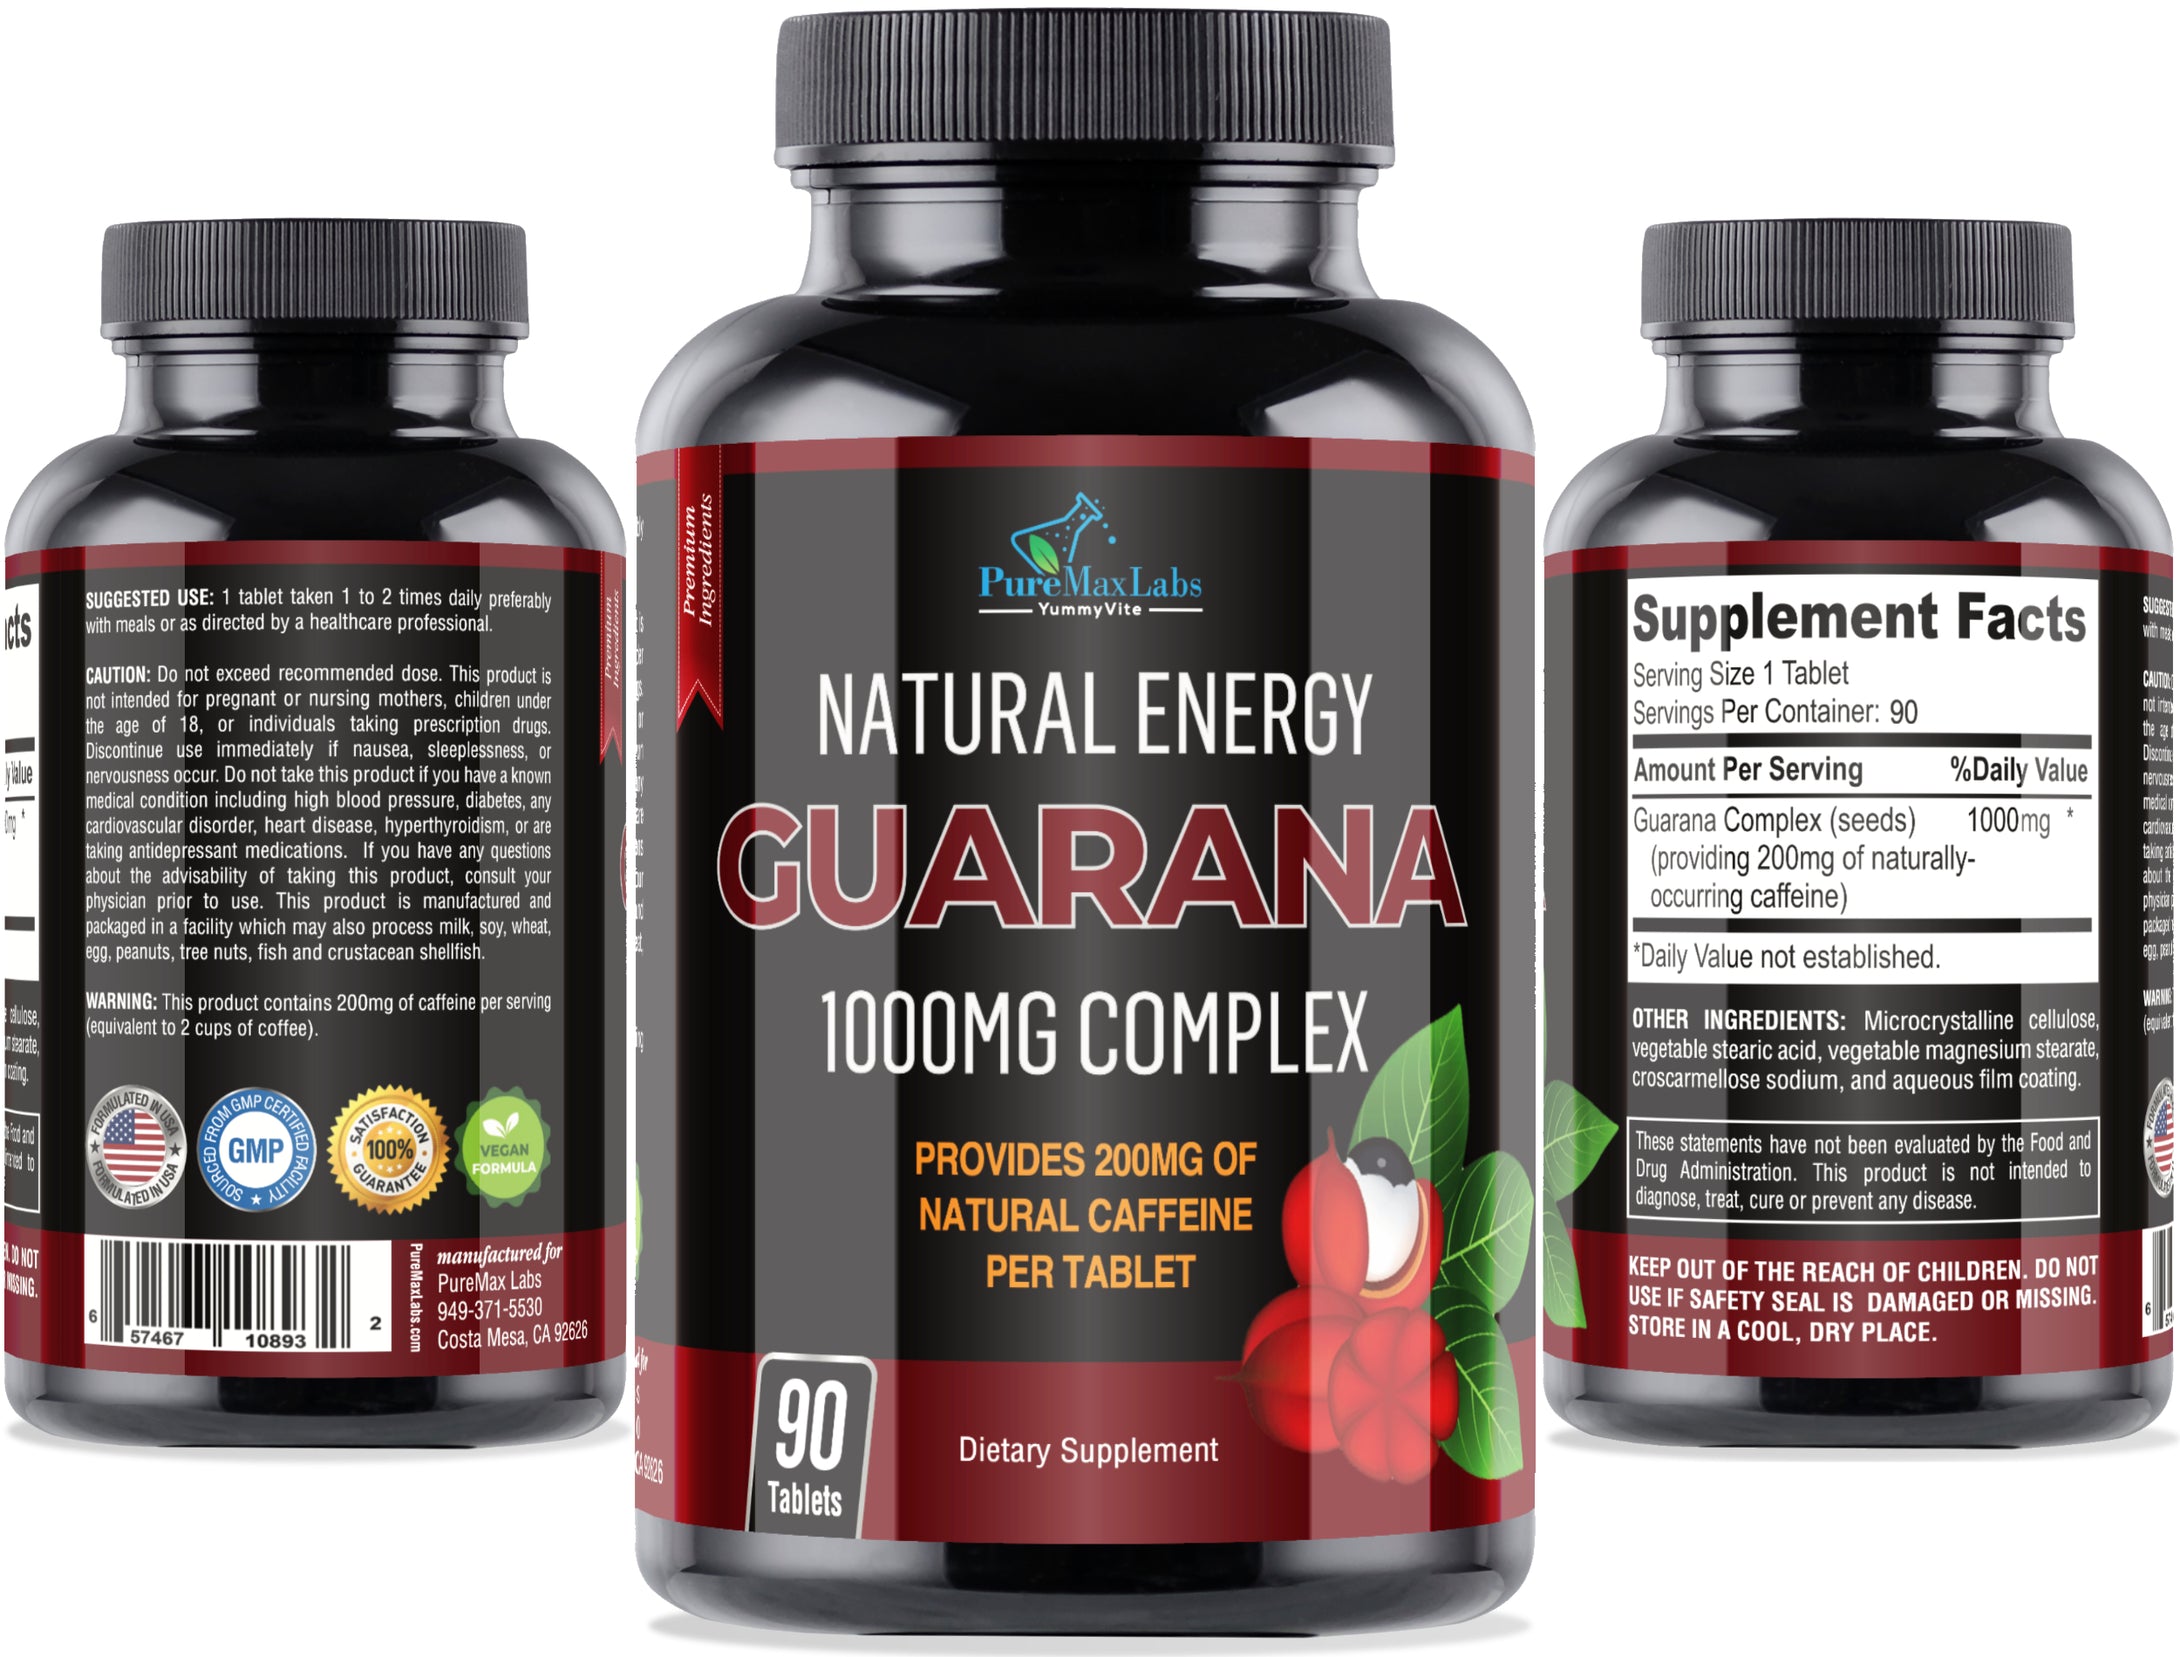 Natural Energy Guarana 1000MG - Provides 200MG of Herbal Caffeine - 90 Tablets